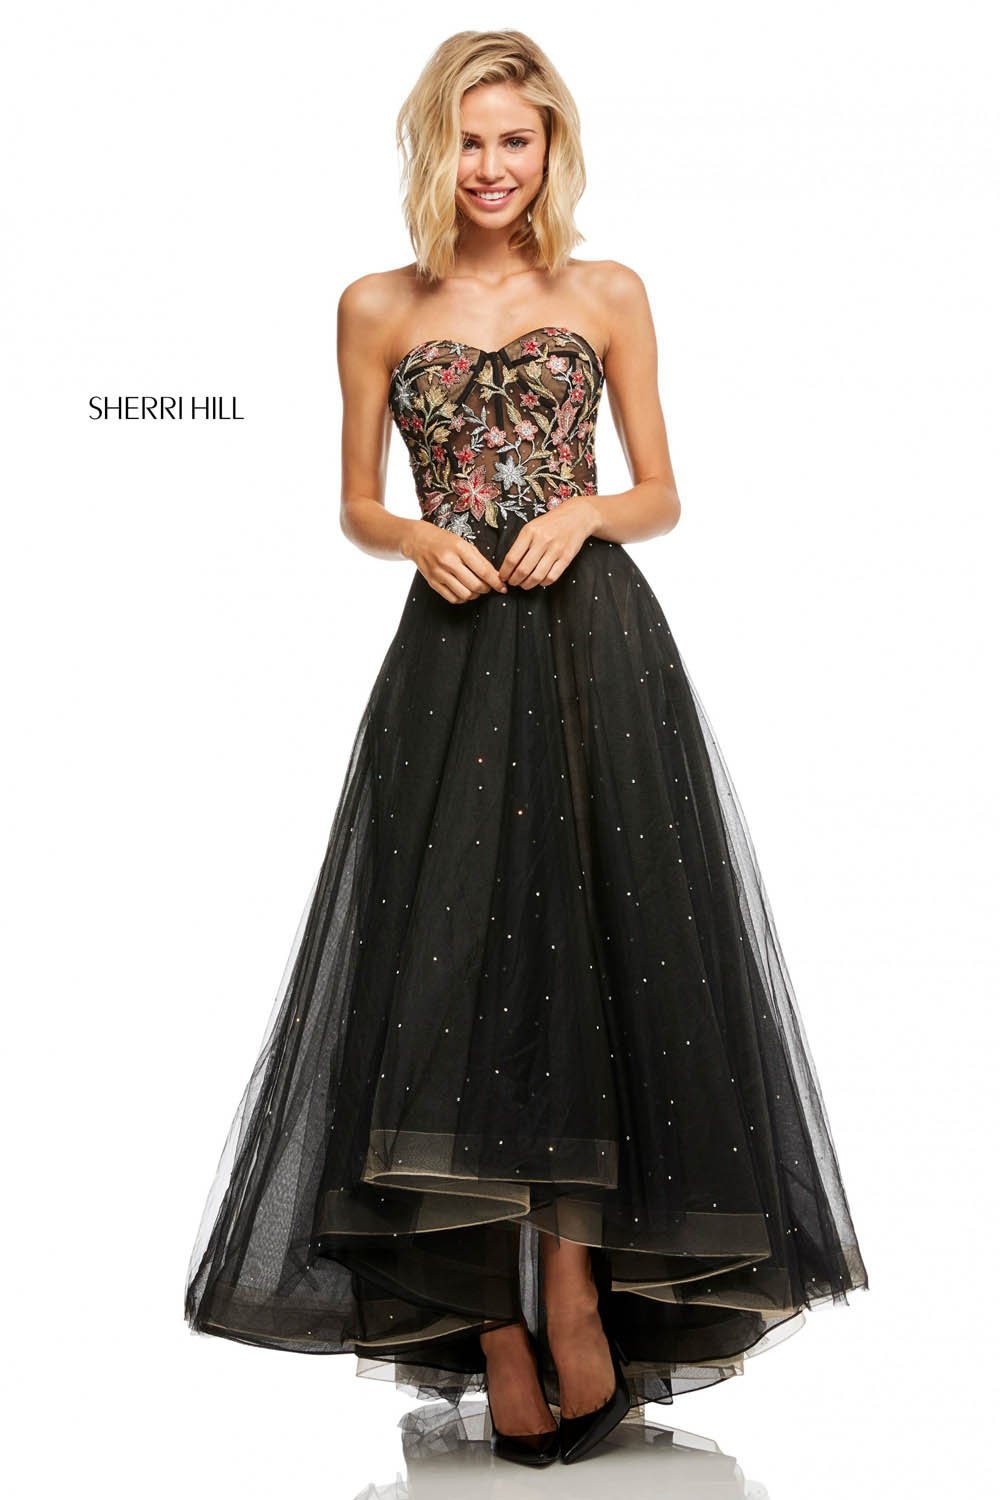 Sherri Hill 52739 dress images in these colors: Black Mulighti.